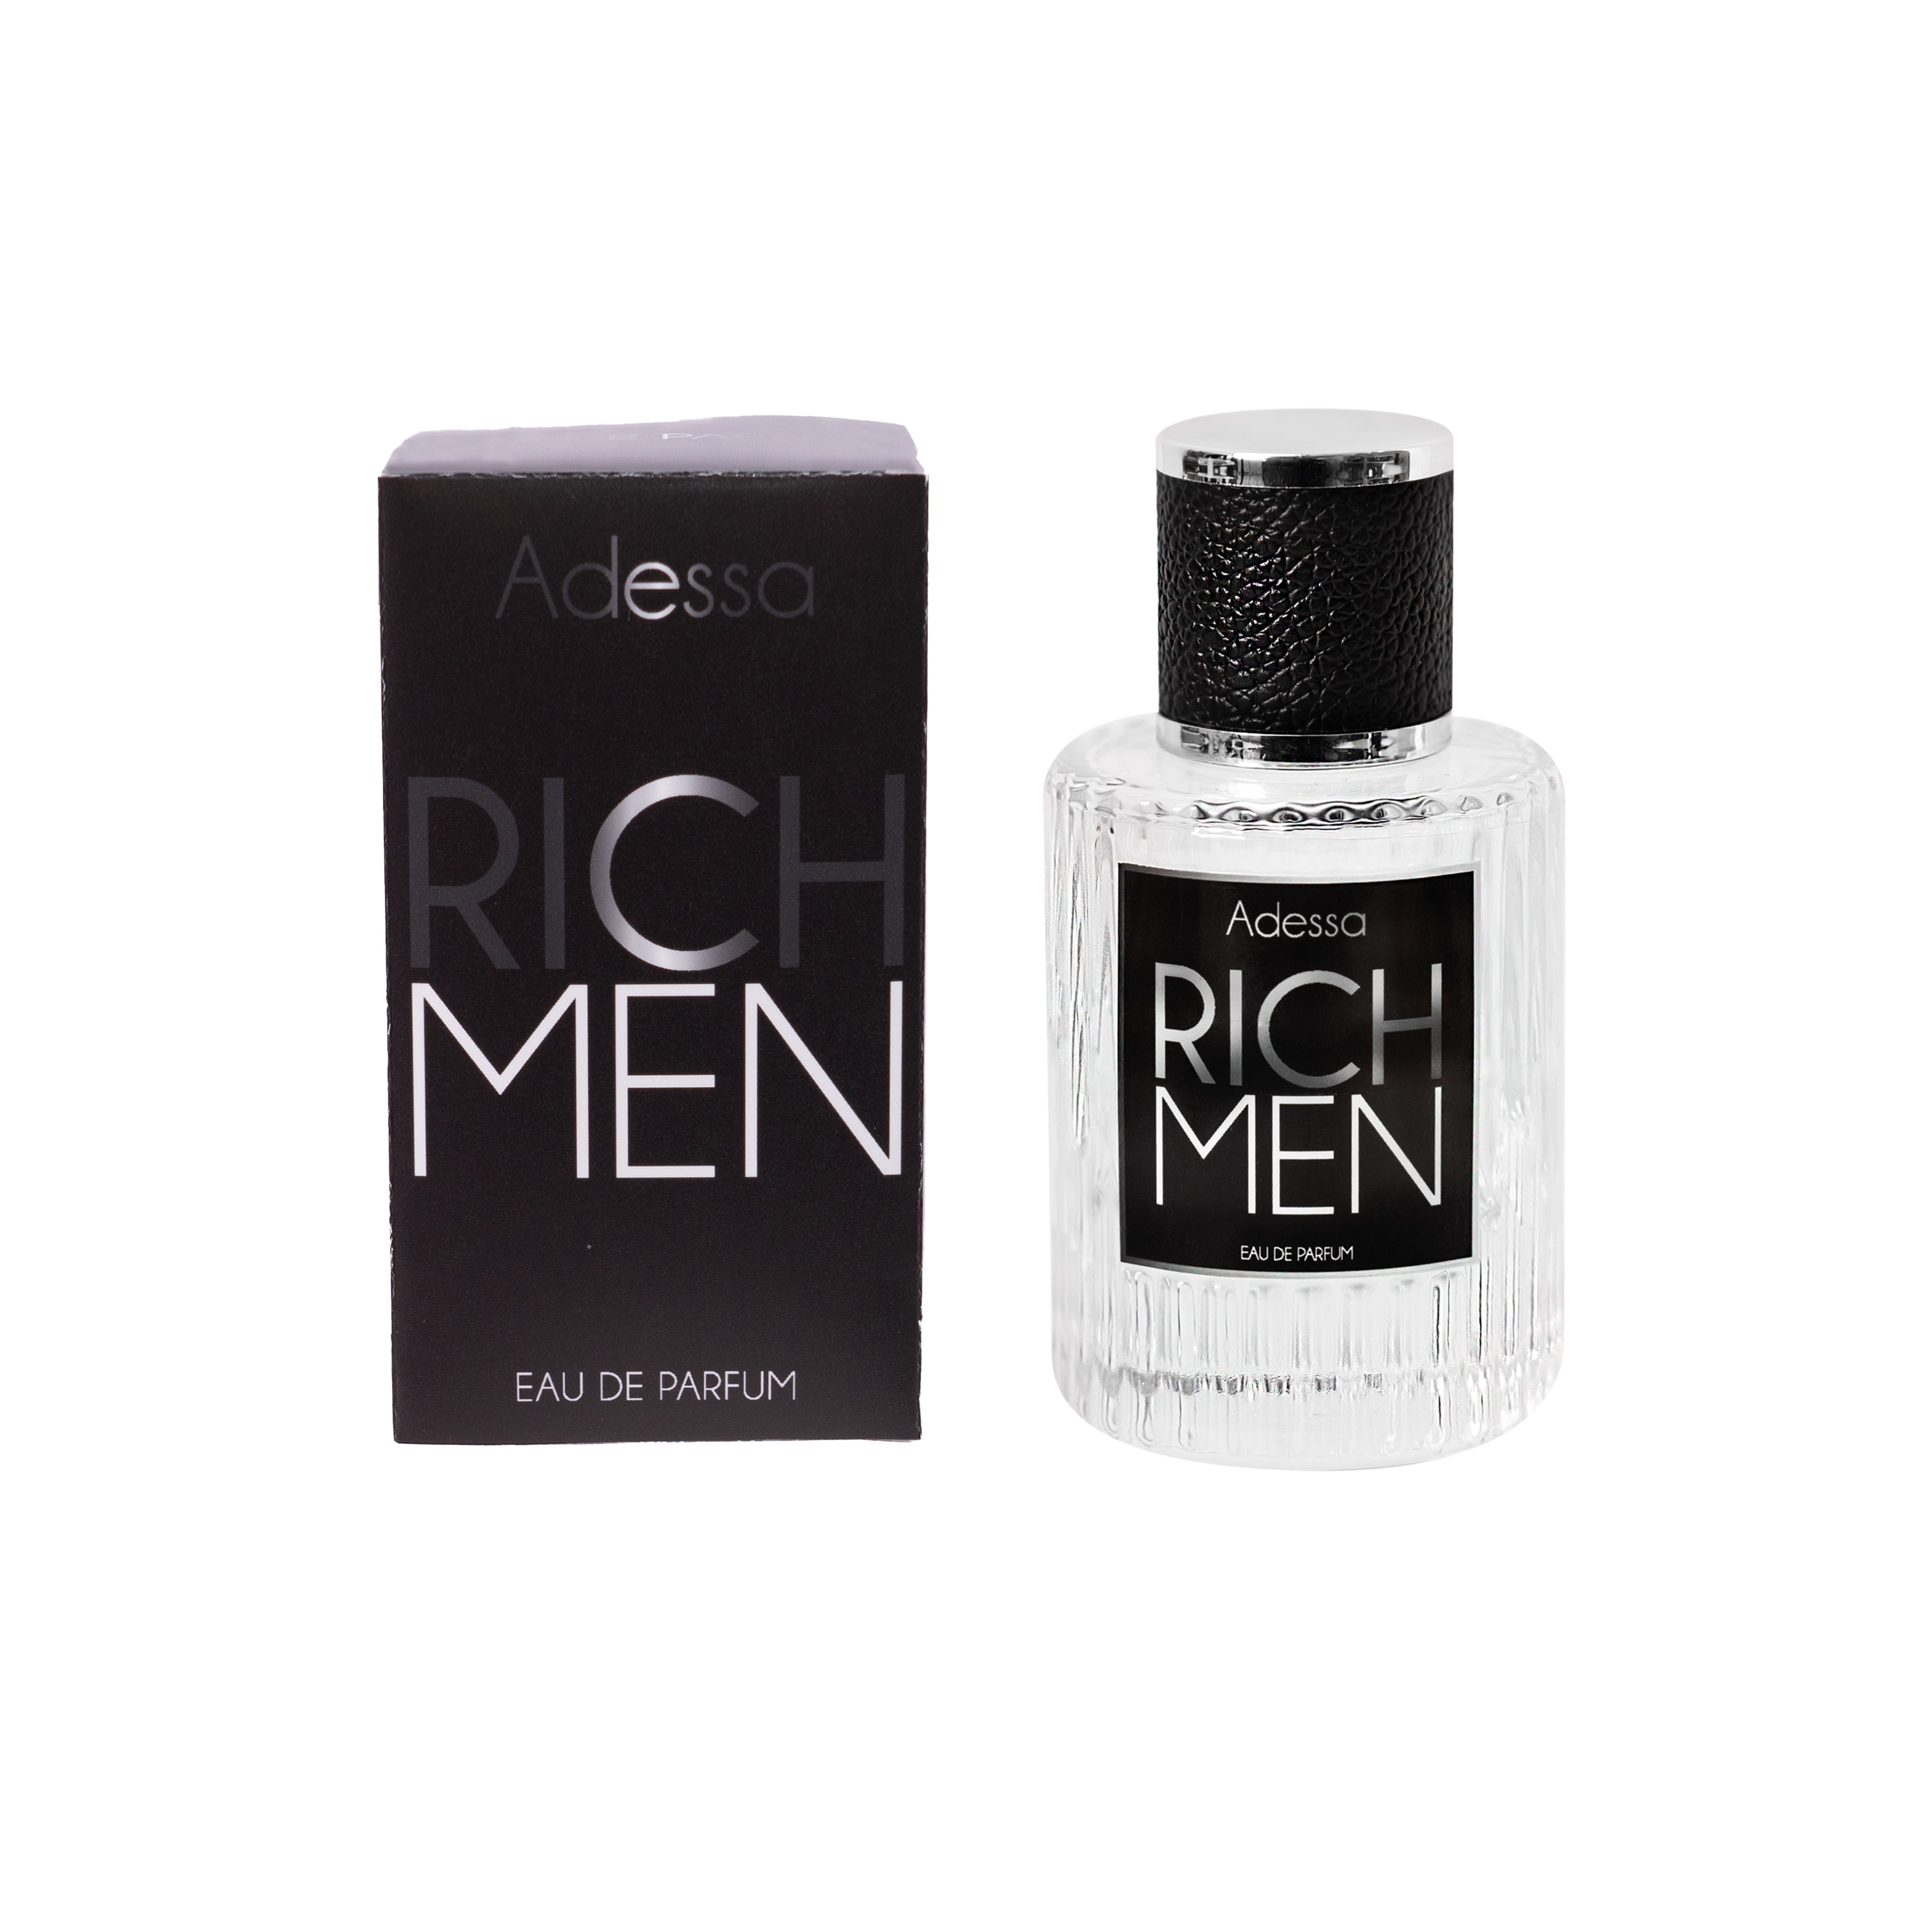 Adessa Eau de Parfum "RICH MEN", 50 ml